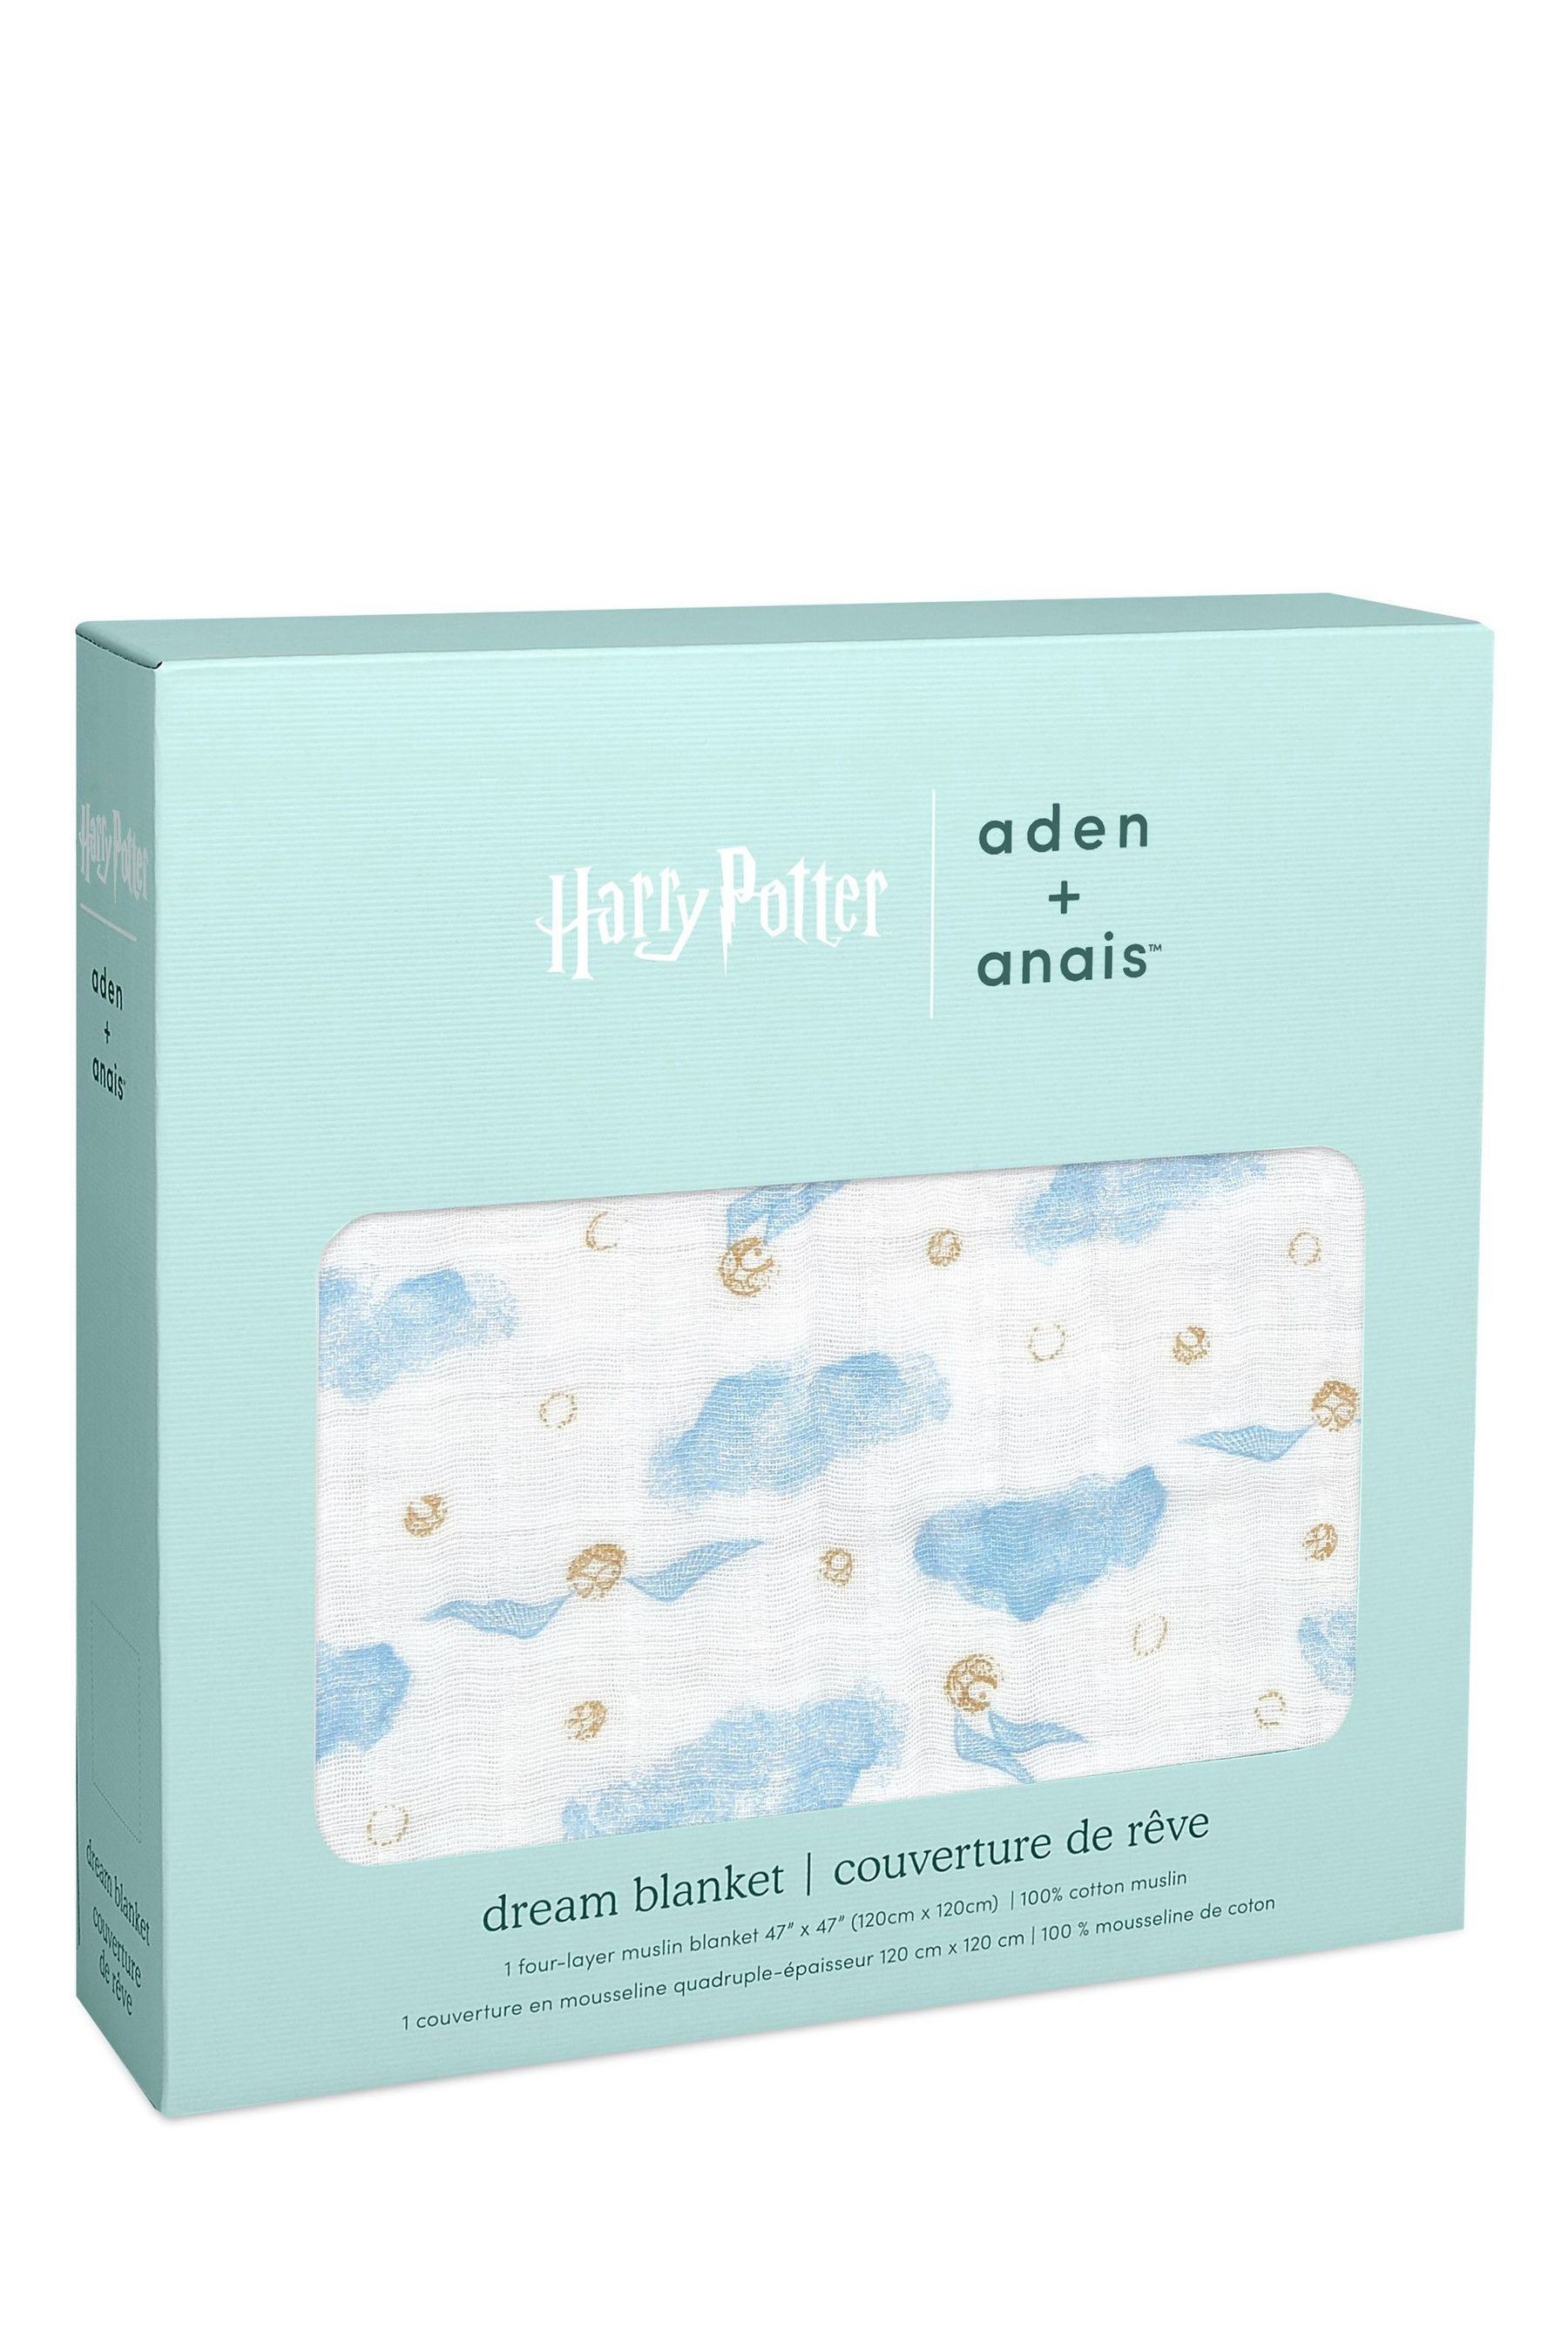 aden + anais White Harry Potter Iconic Dream Blanket